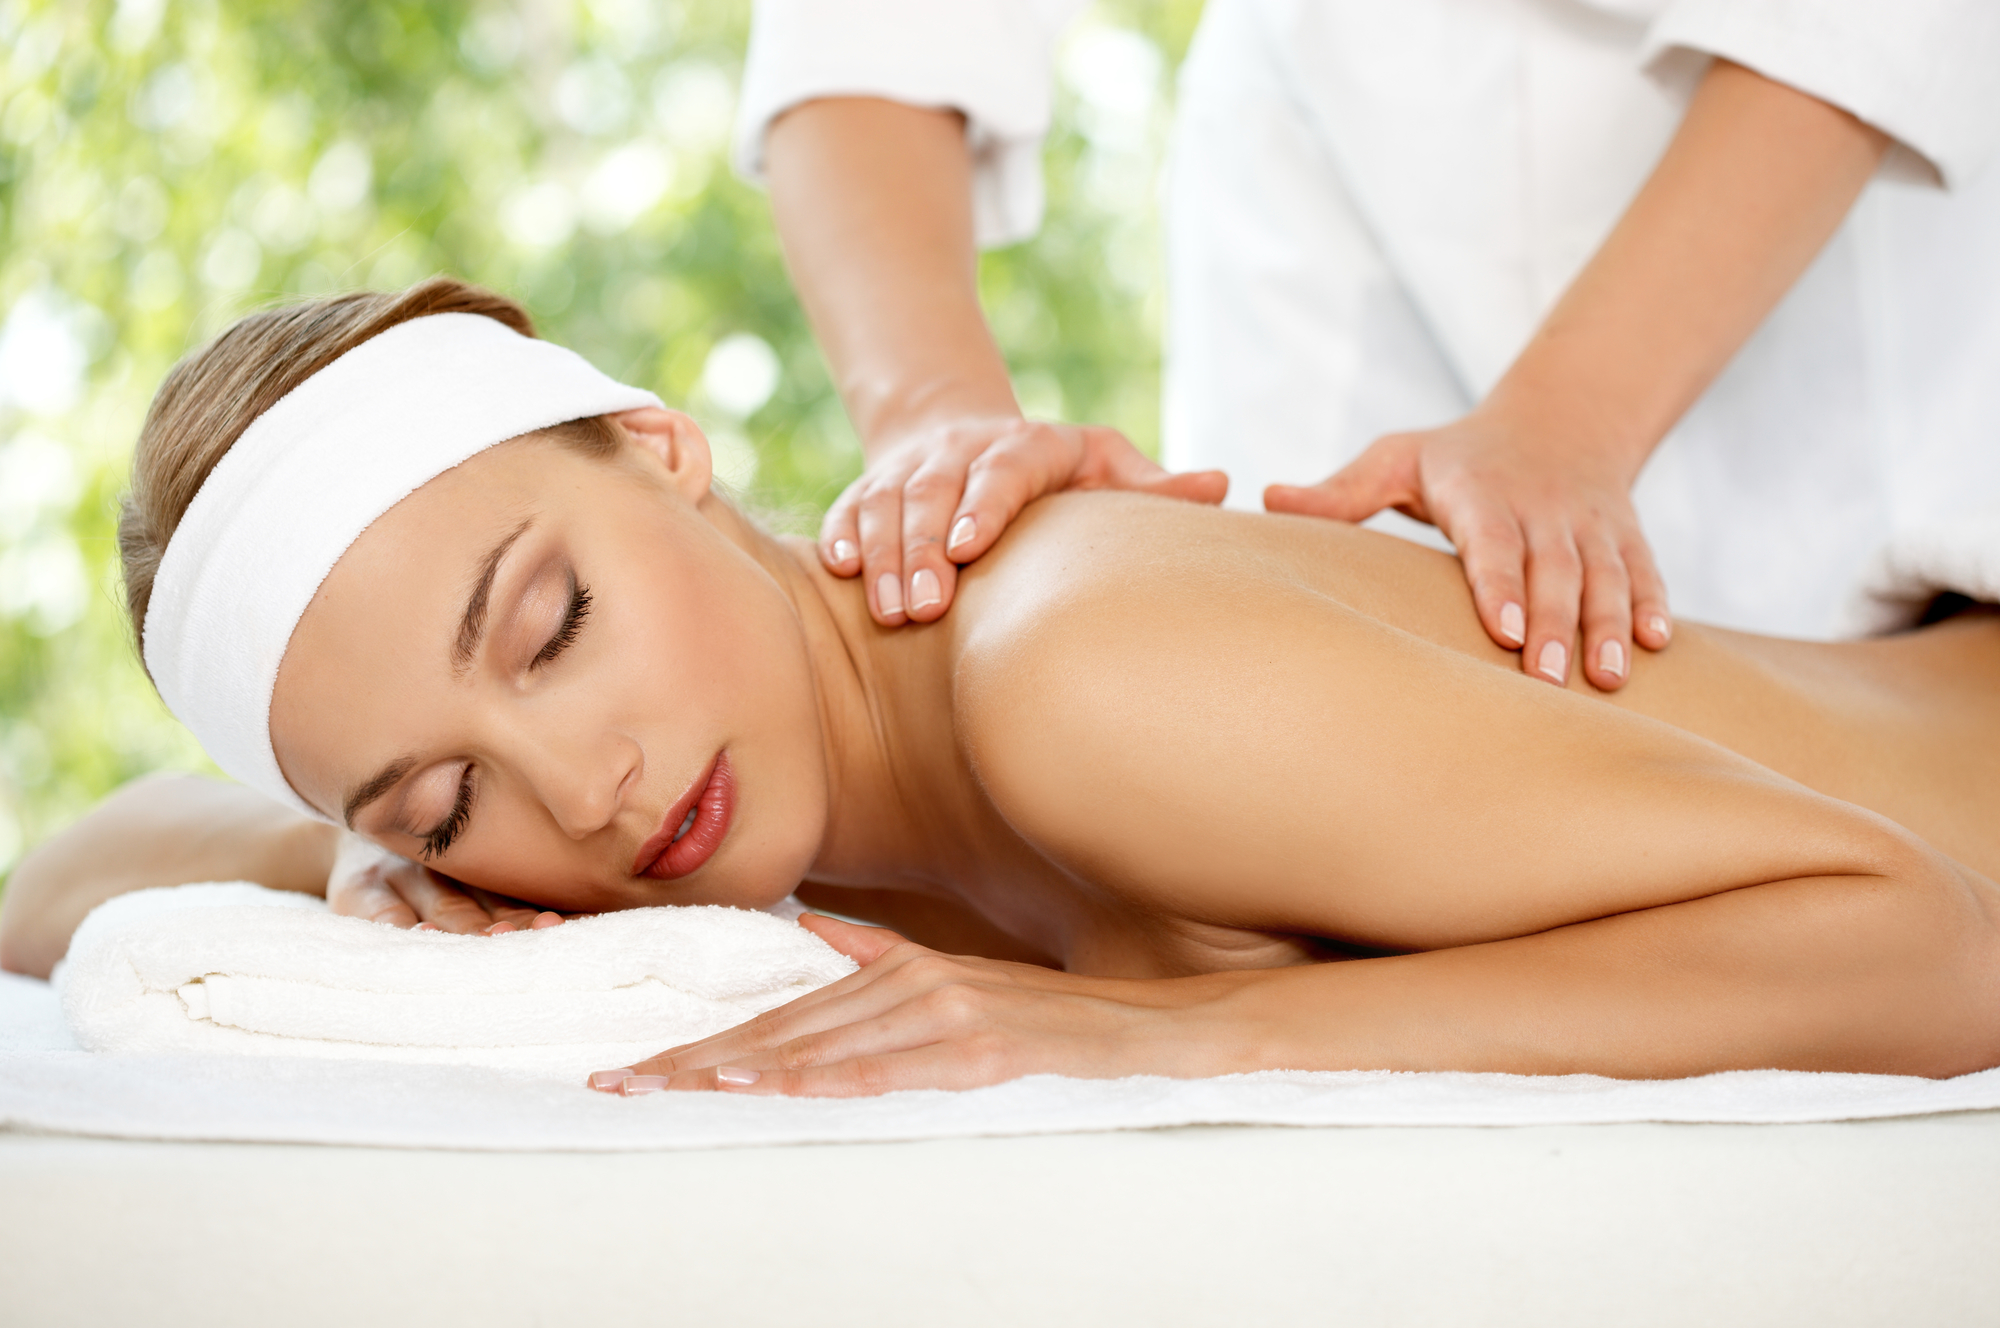 Massage Services - Bliss Thai Massage and Beauty Therapy - Massage treatment